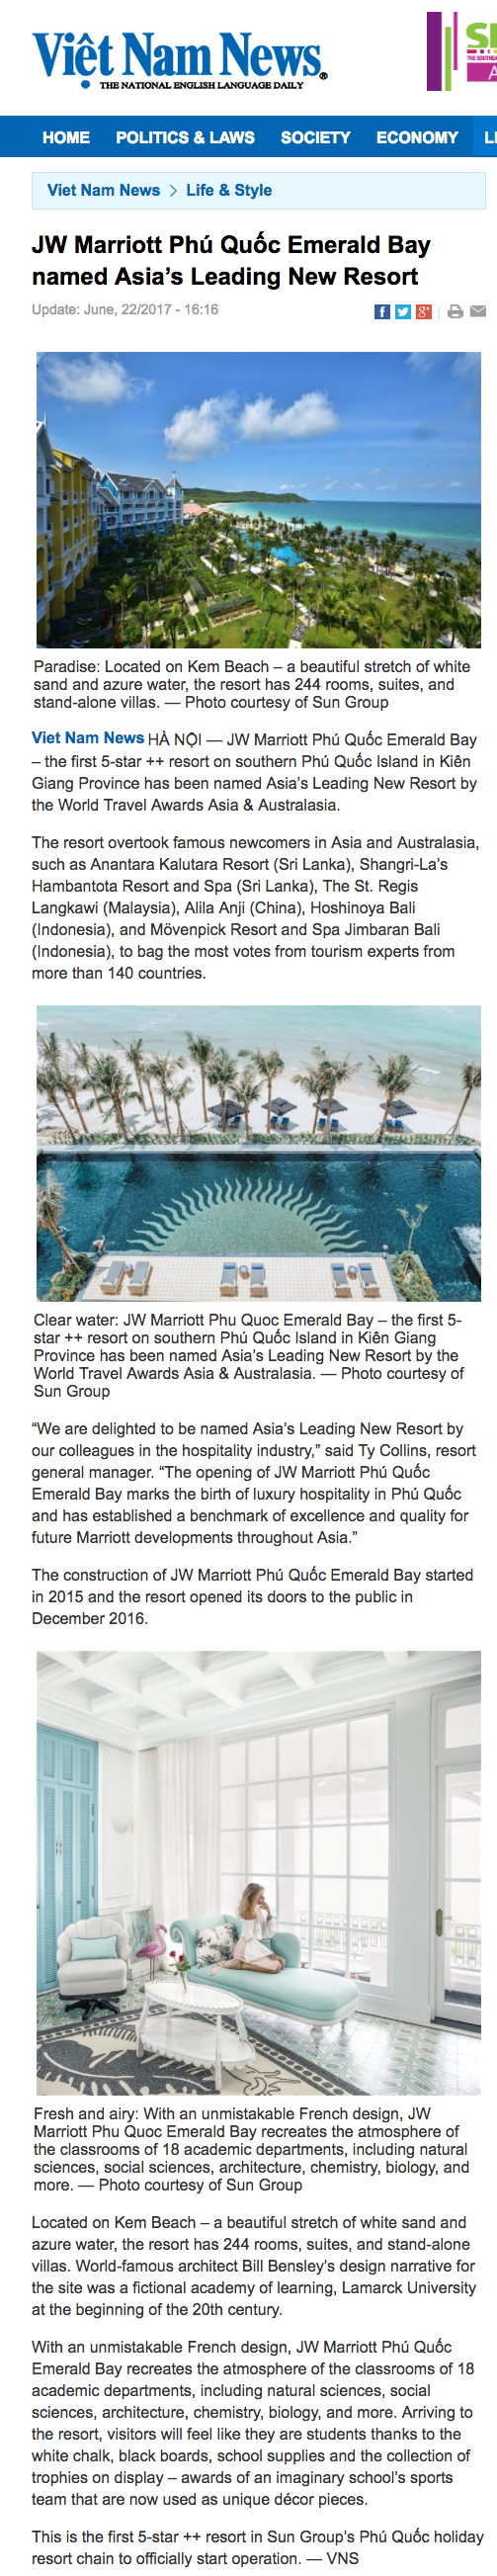 JW Marriott Phú Quốc Emerald Bay named Asia’s Leading New Resort